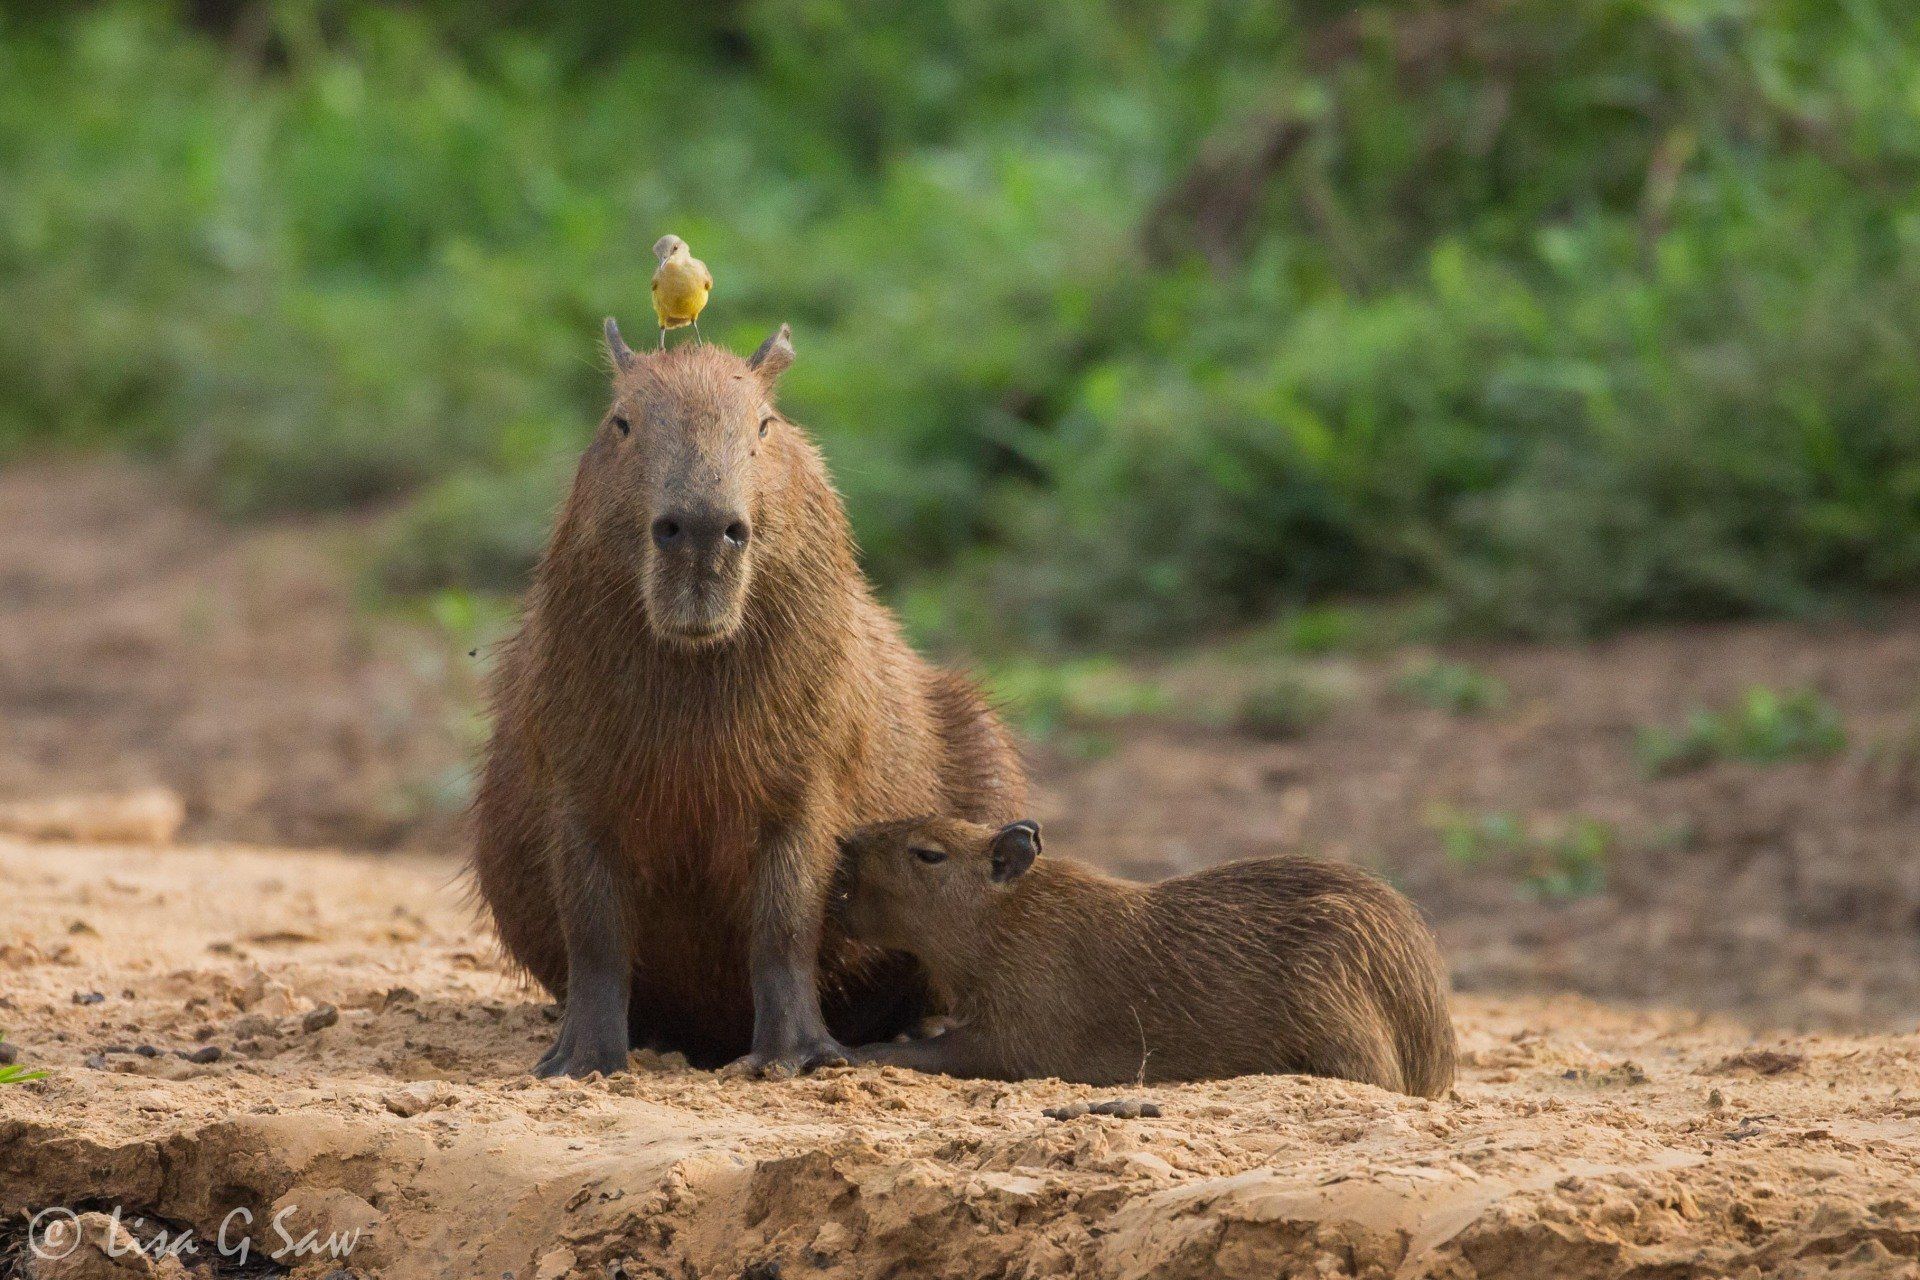 Baby Capybara suckling its mother